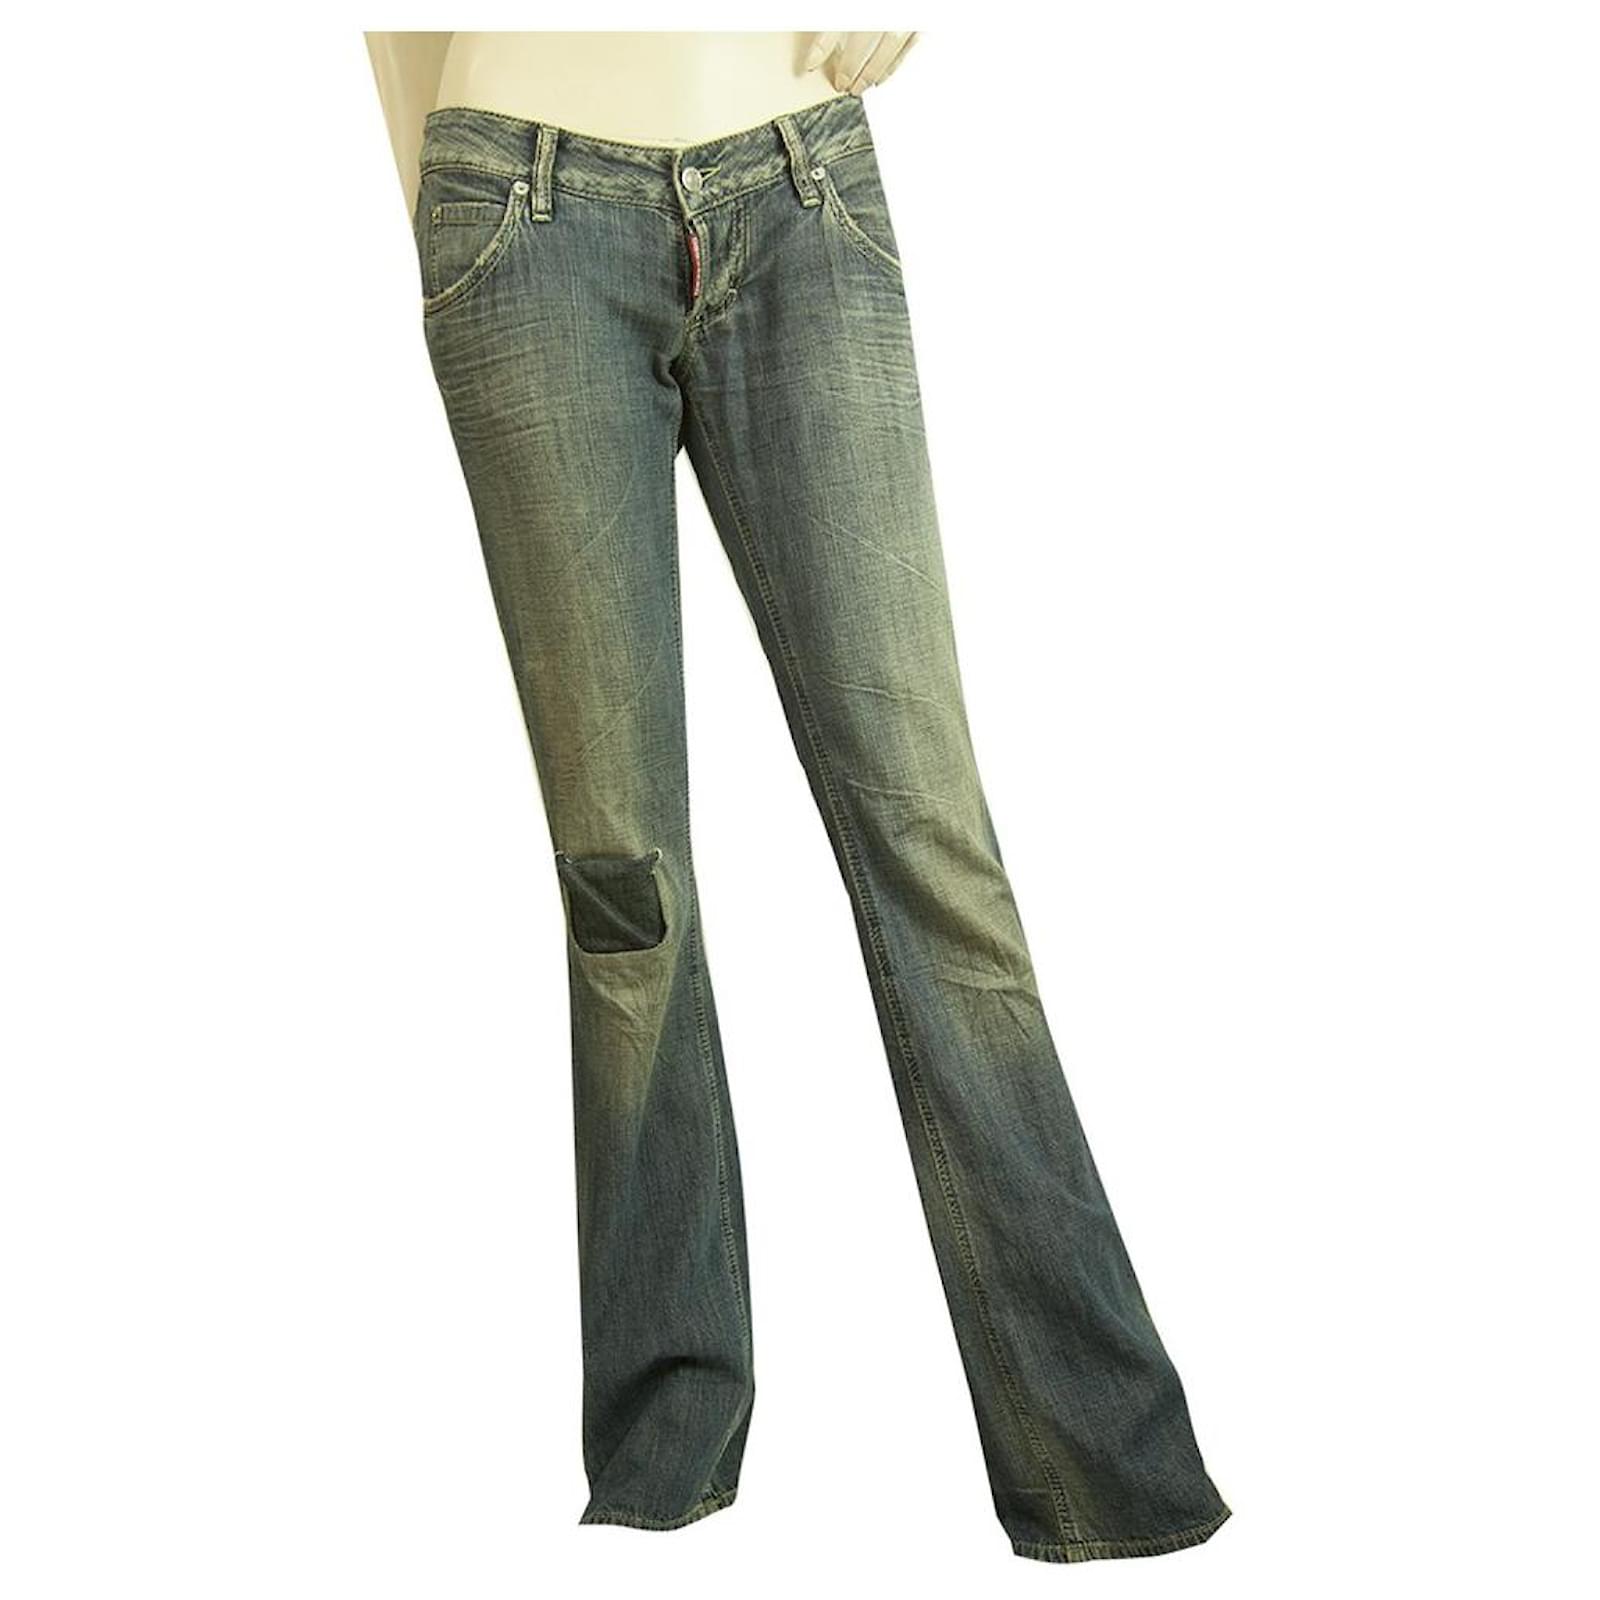 https://cdn1.jolicloset.com/imgr/full/2021/12/411850-1/cotone-dsquared-2-pantaloni-blu-denim-jeans-a-vita-bassa-con-toppe-al-ginocchio-pantaloni-sz-40.jpg